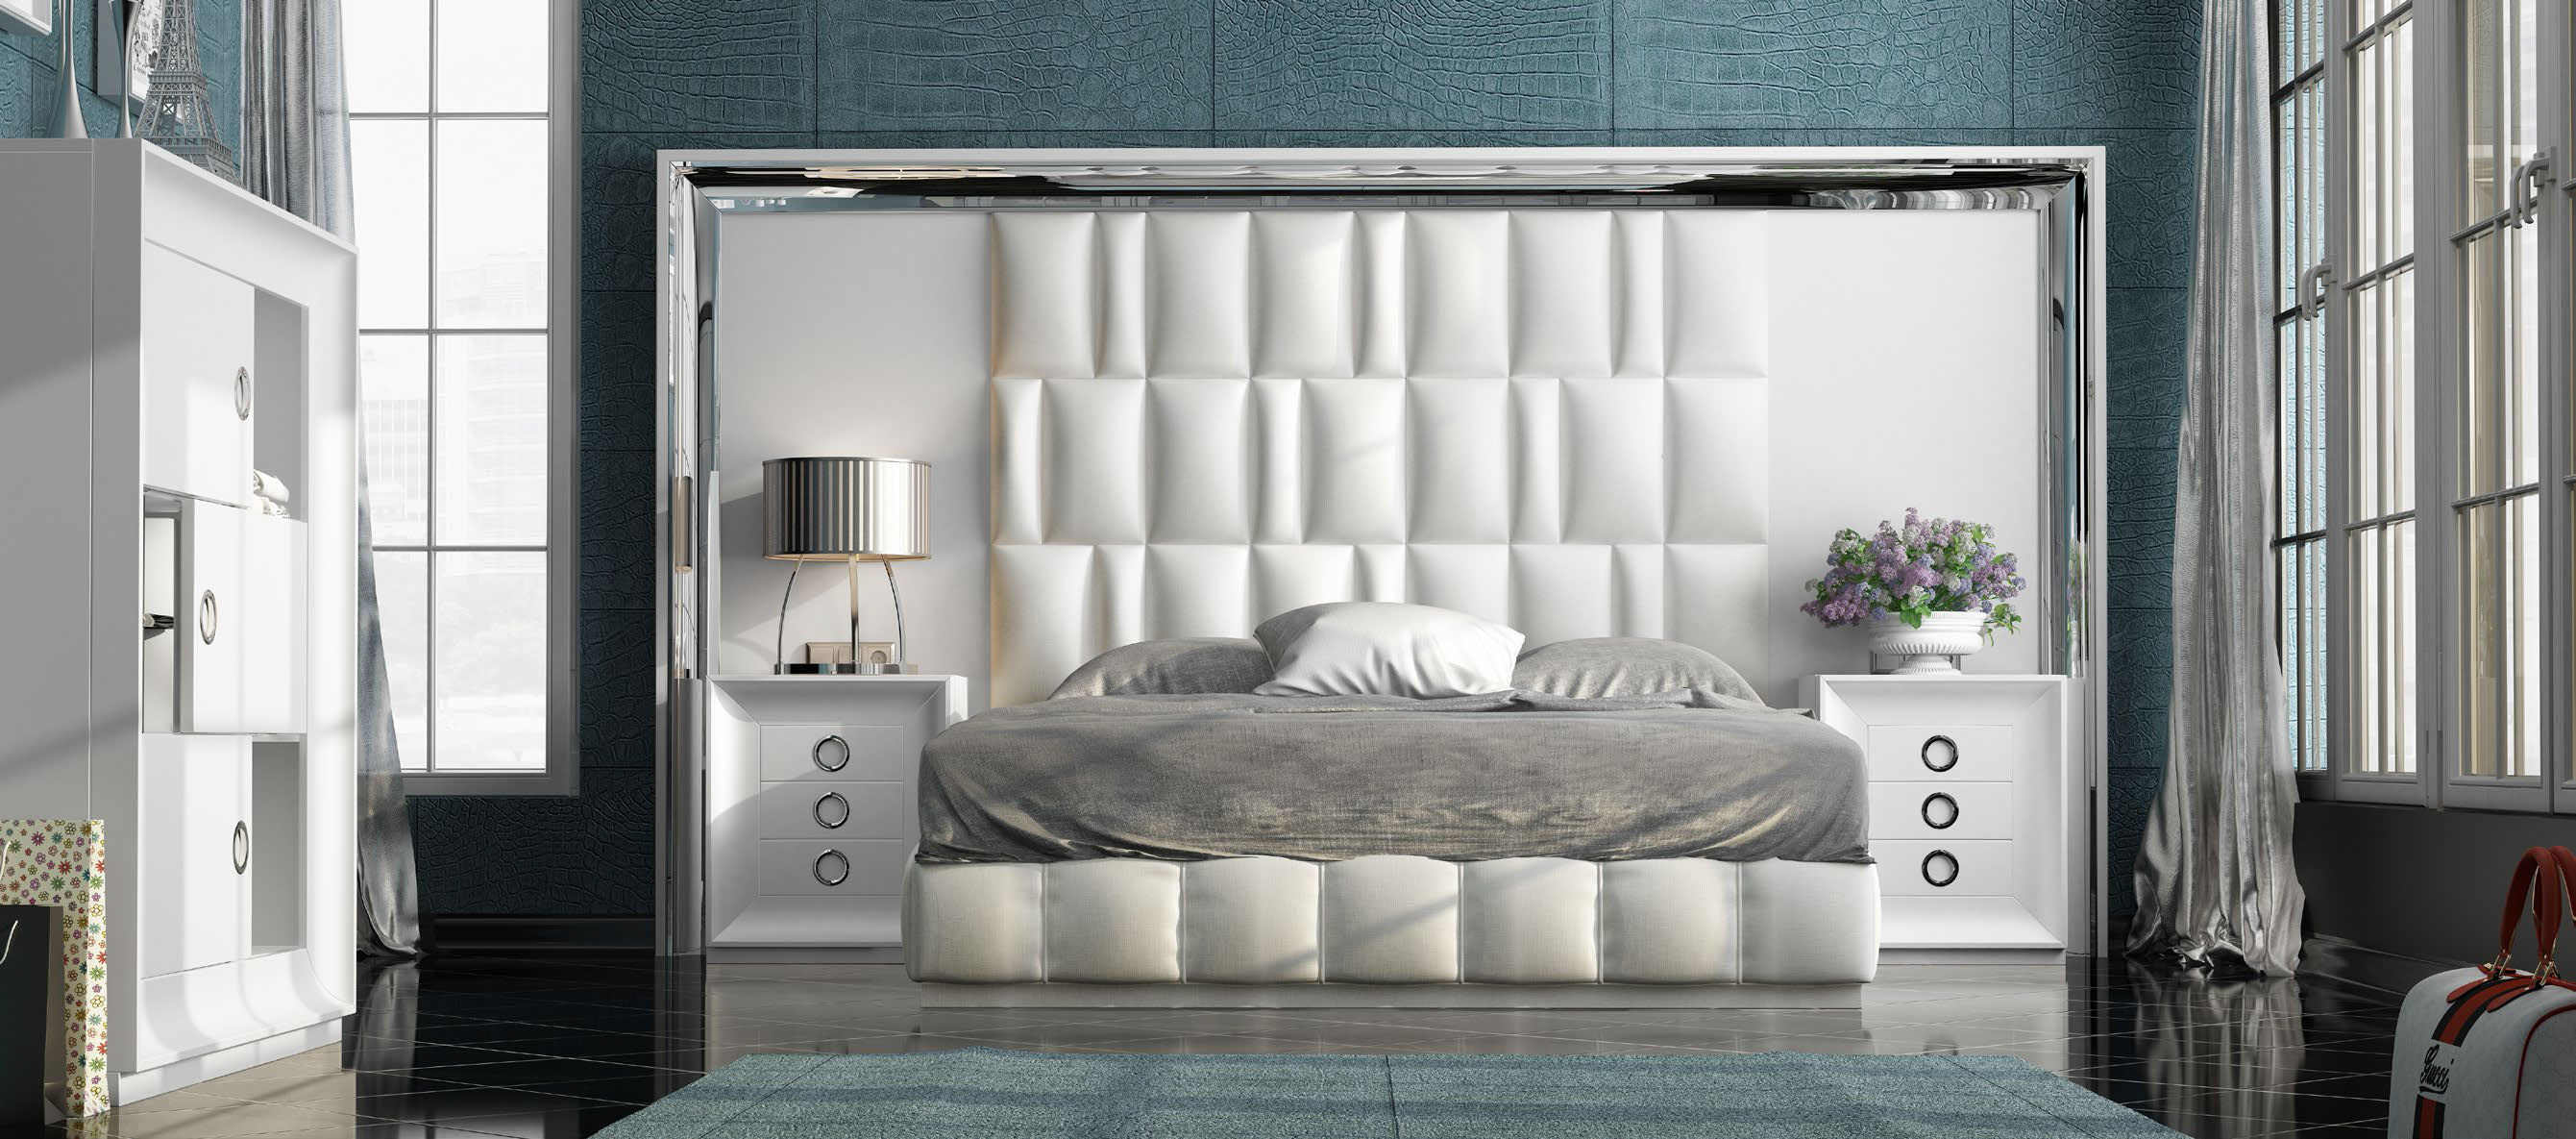 Brands Franco Furniture Bedrooms vol3, Spain DOR 102